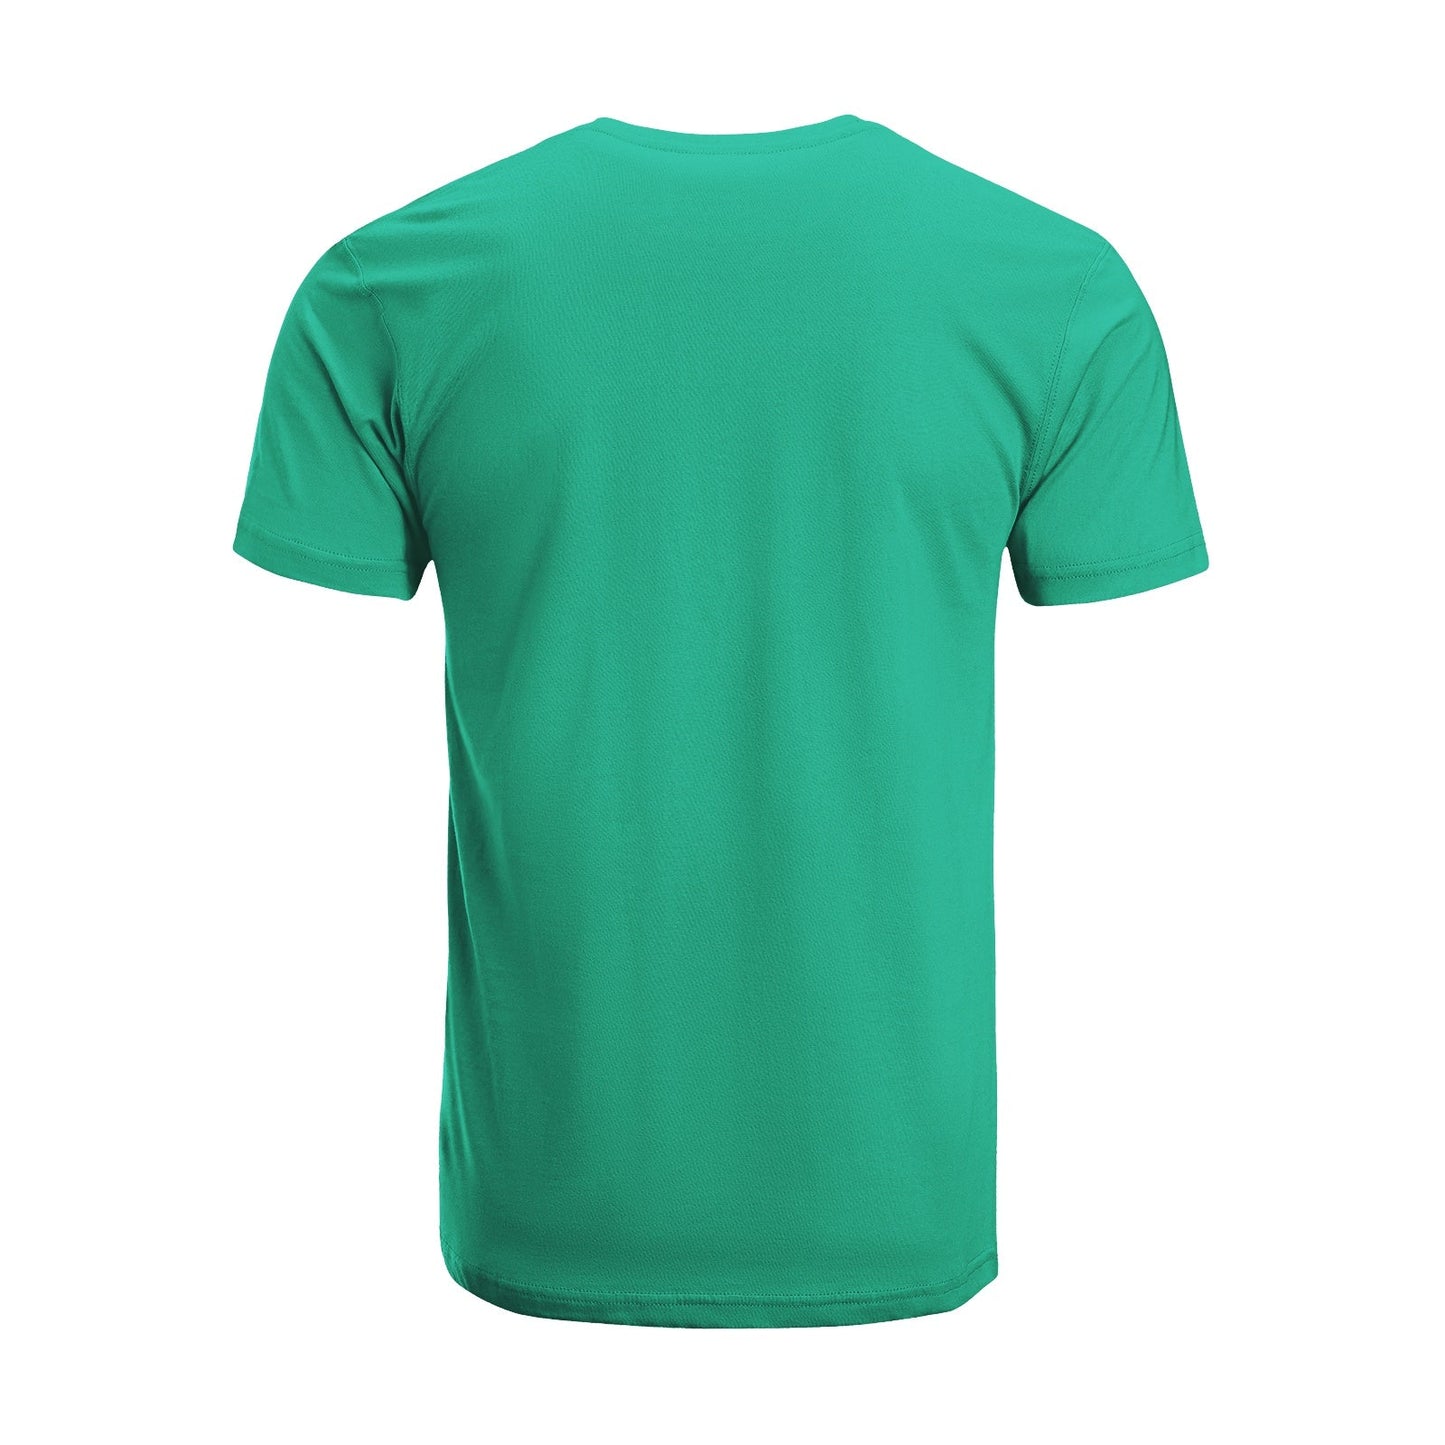 Unisex Short Sleeve Crew Neck Cotton Jersey T-Shirt USA 06